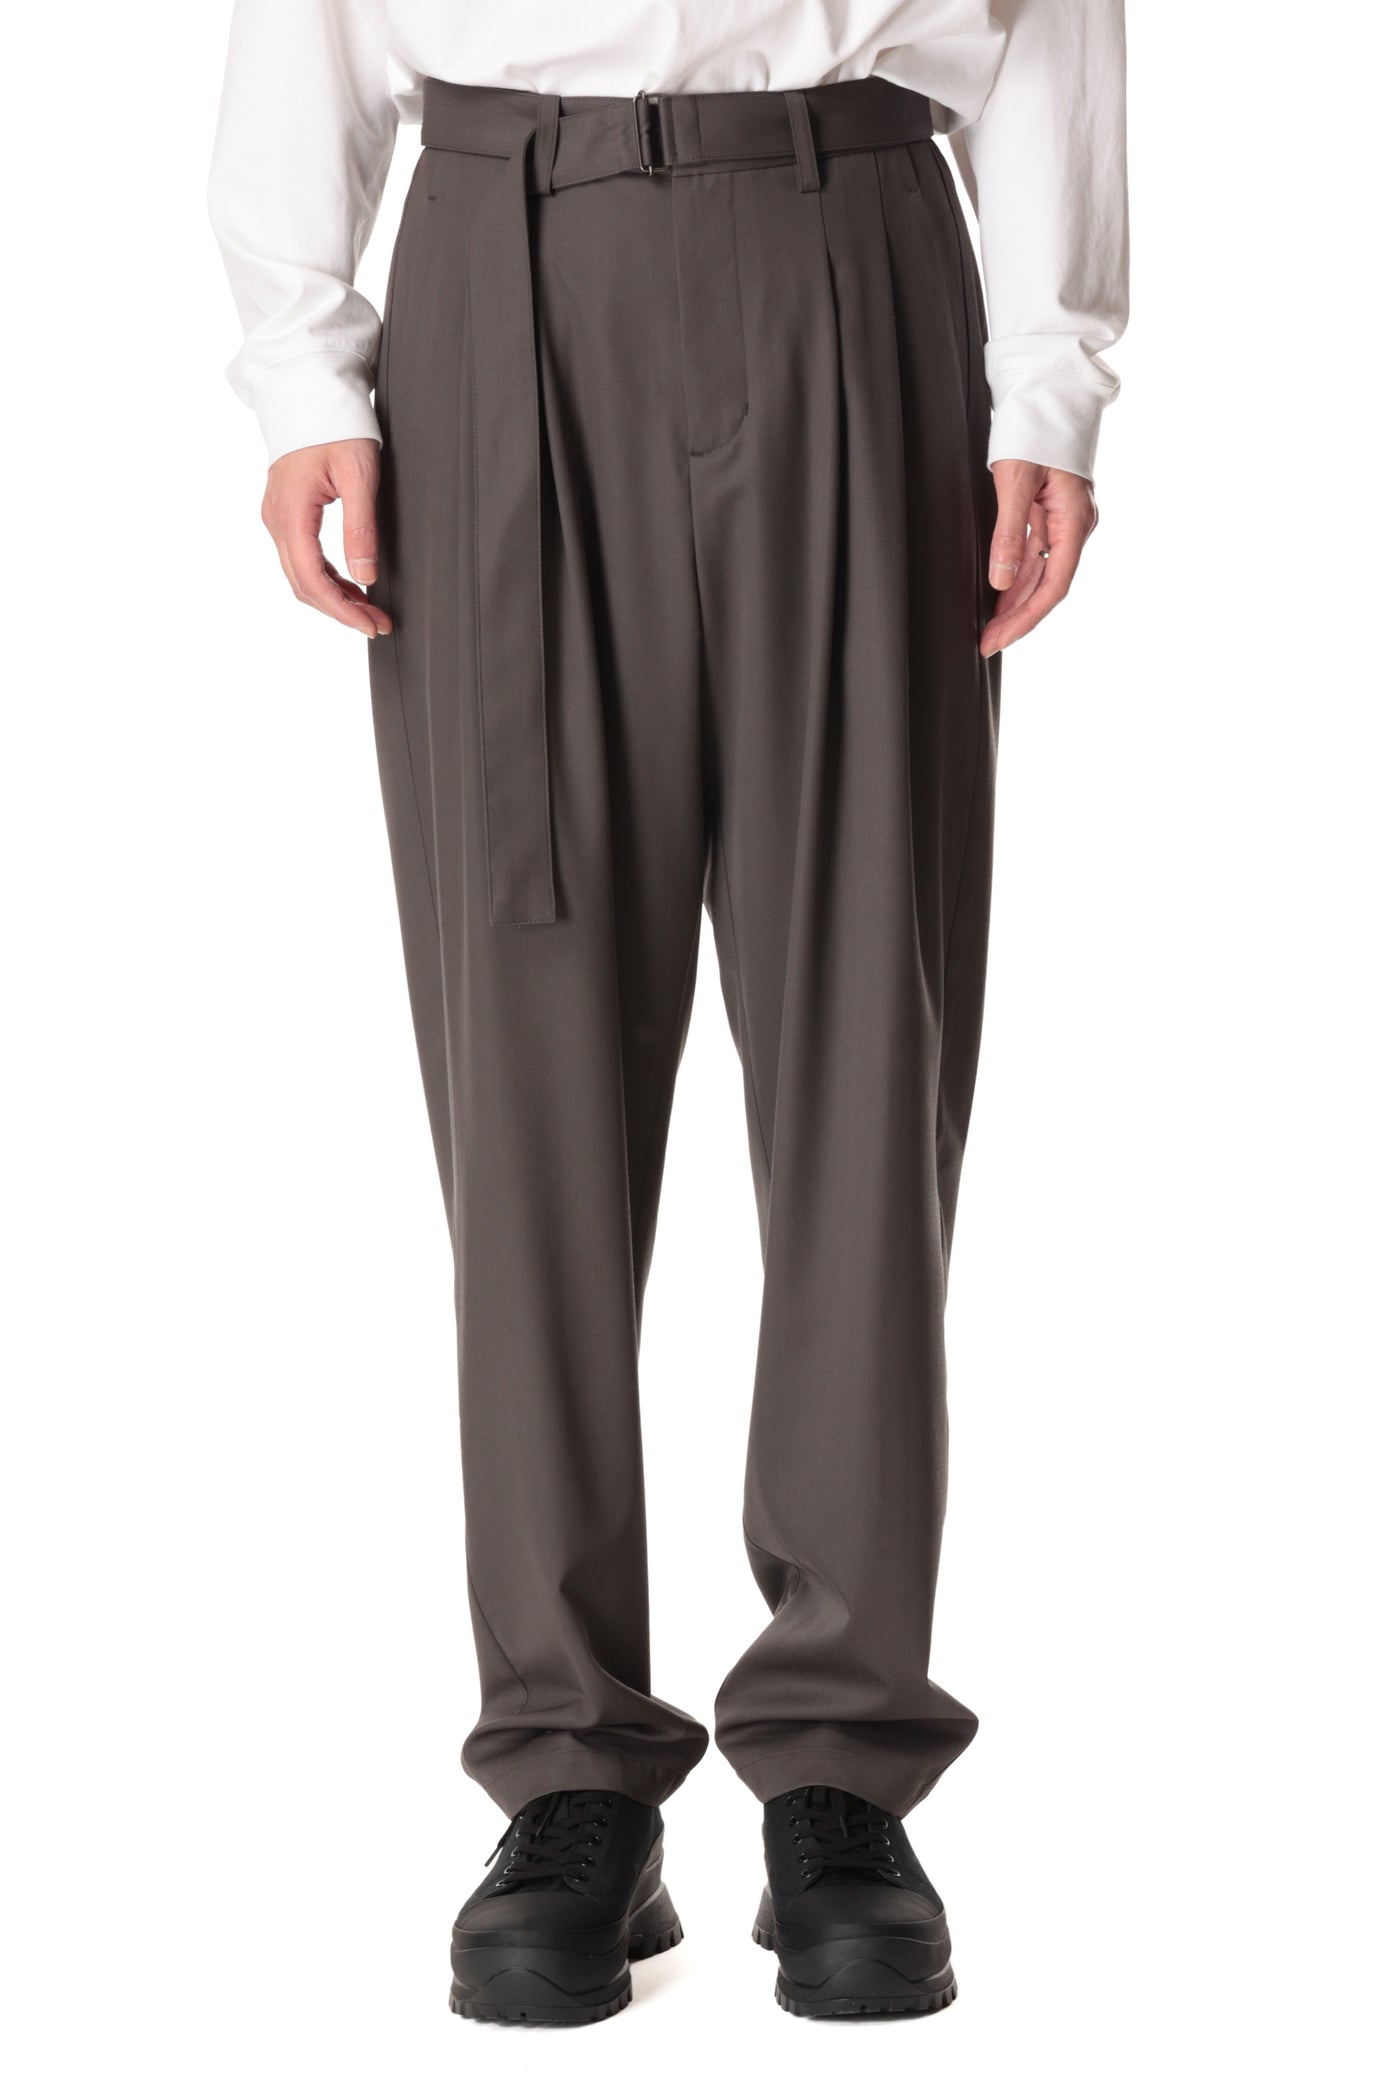 AP32-042 Wool gabardine 2-tuck wide tapered pants with belt